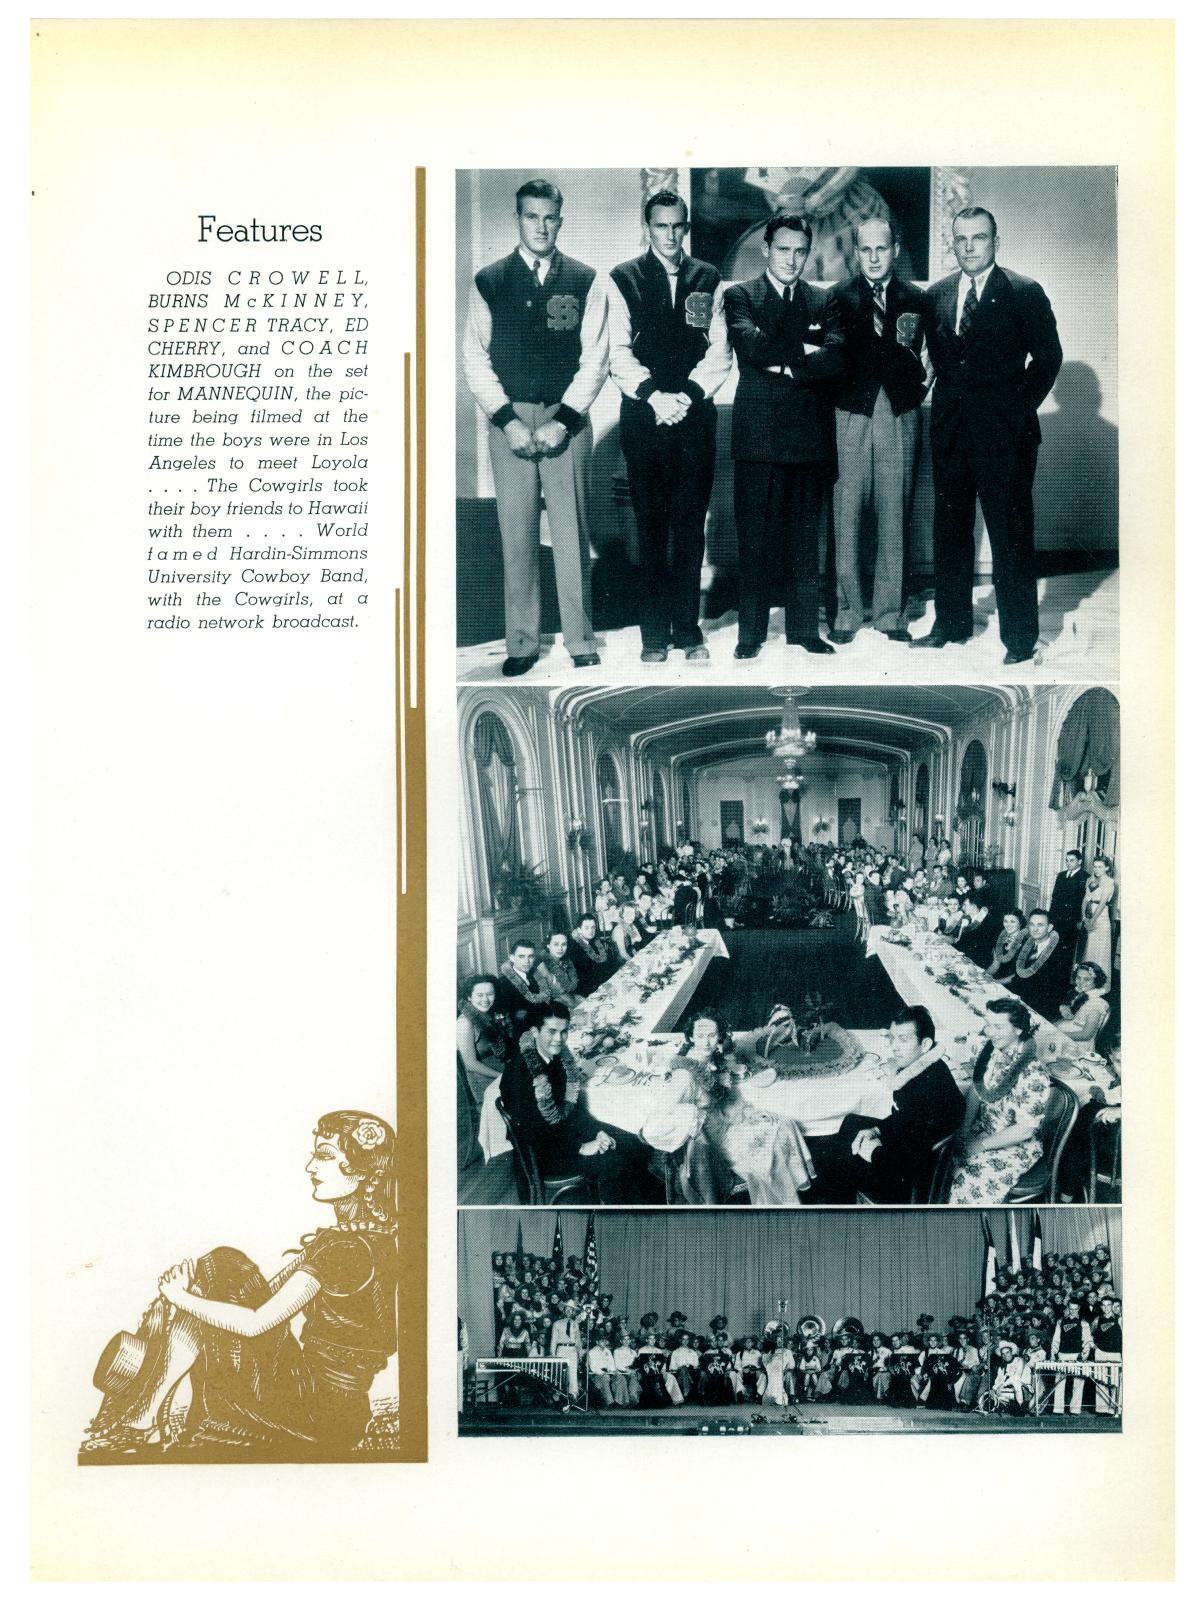 The Bronco, Yearbook of Hardin-Simmons University, 1938
                                                
                                                    48
                                                